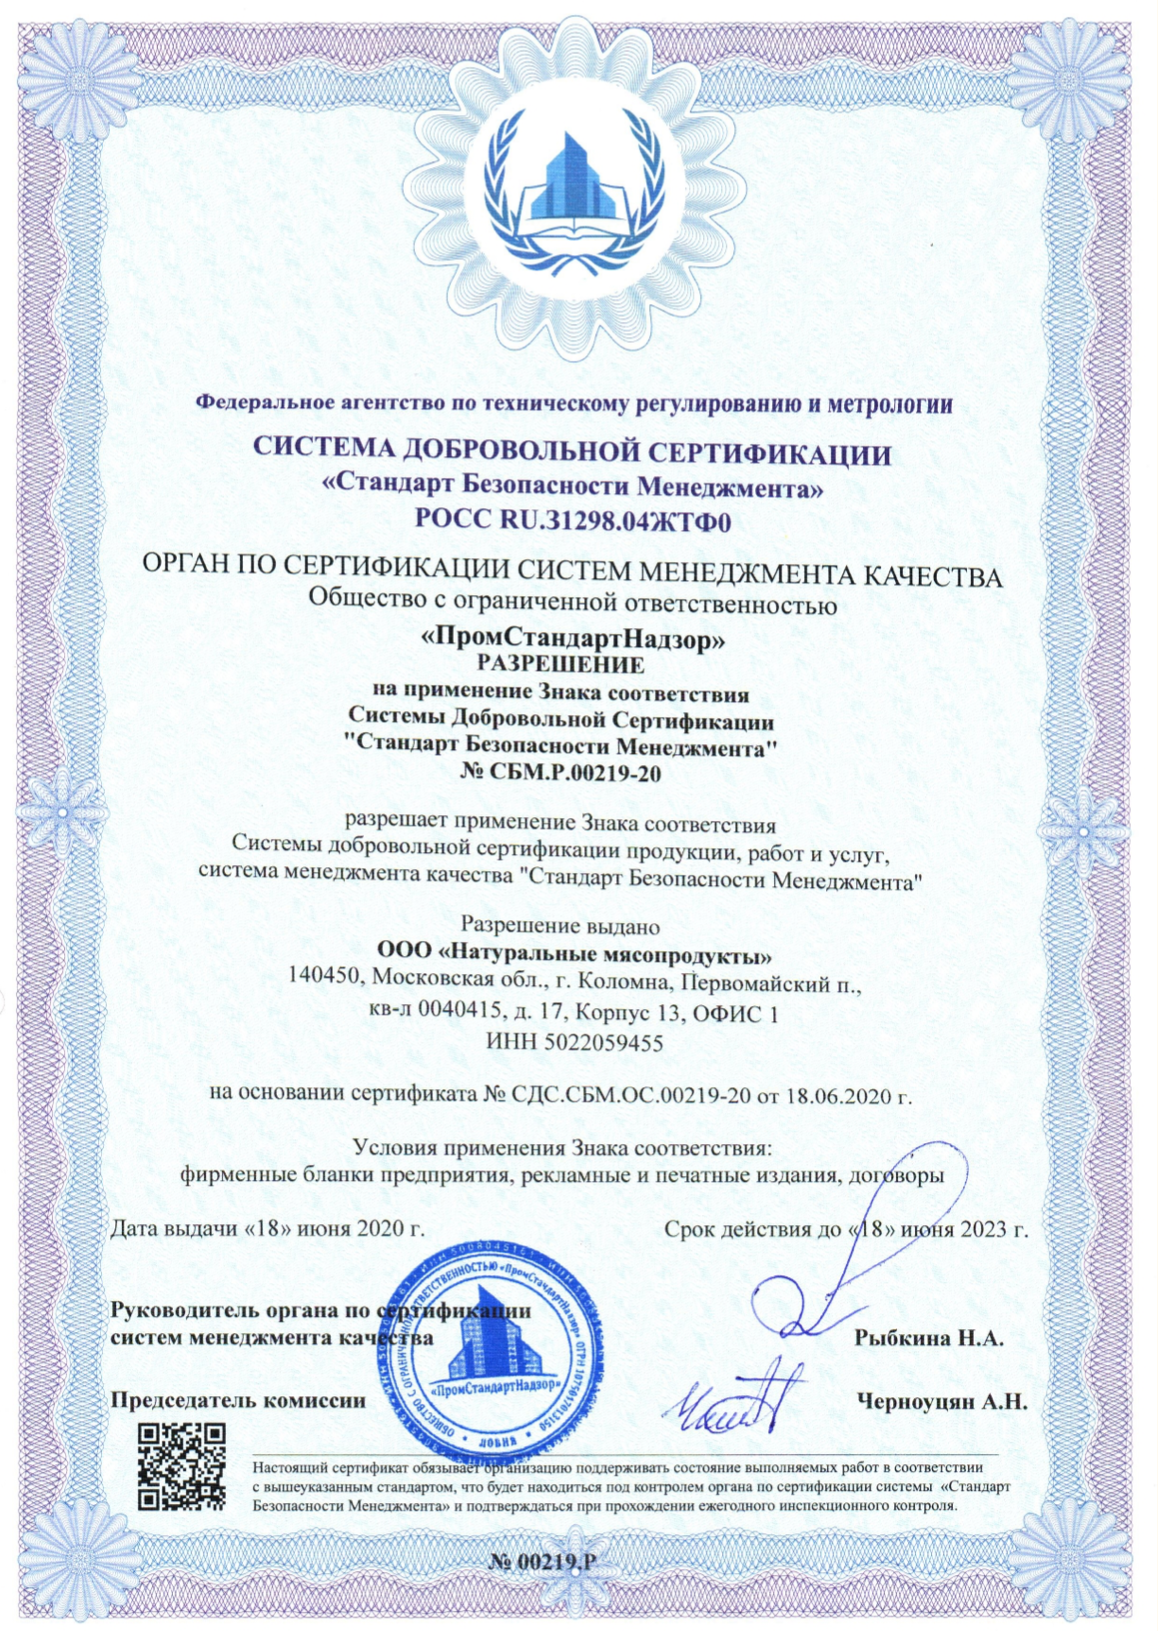 Сертификат ХАССП